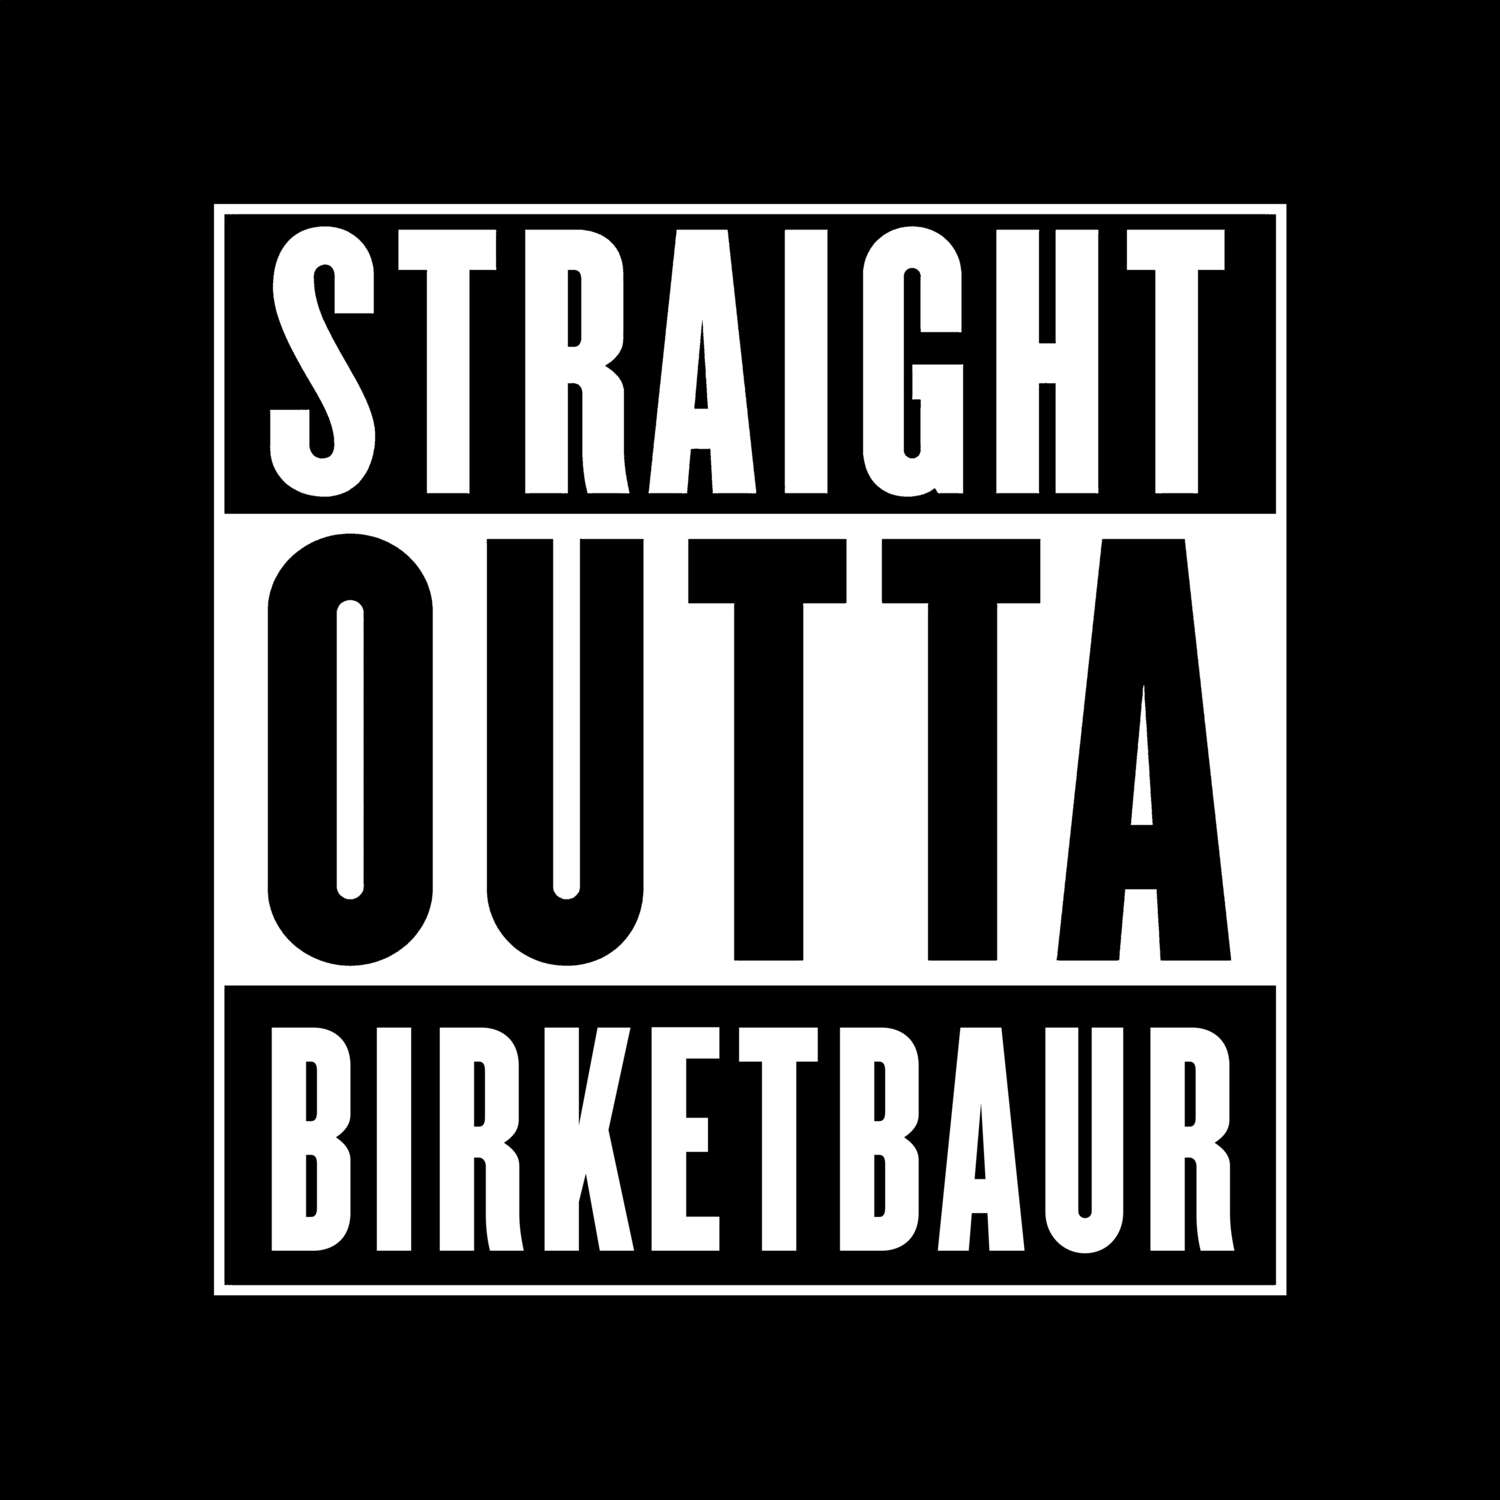 Birketbaur T-Shirt »Straight Outta«